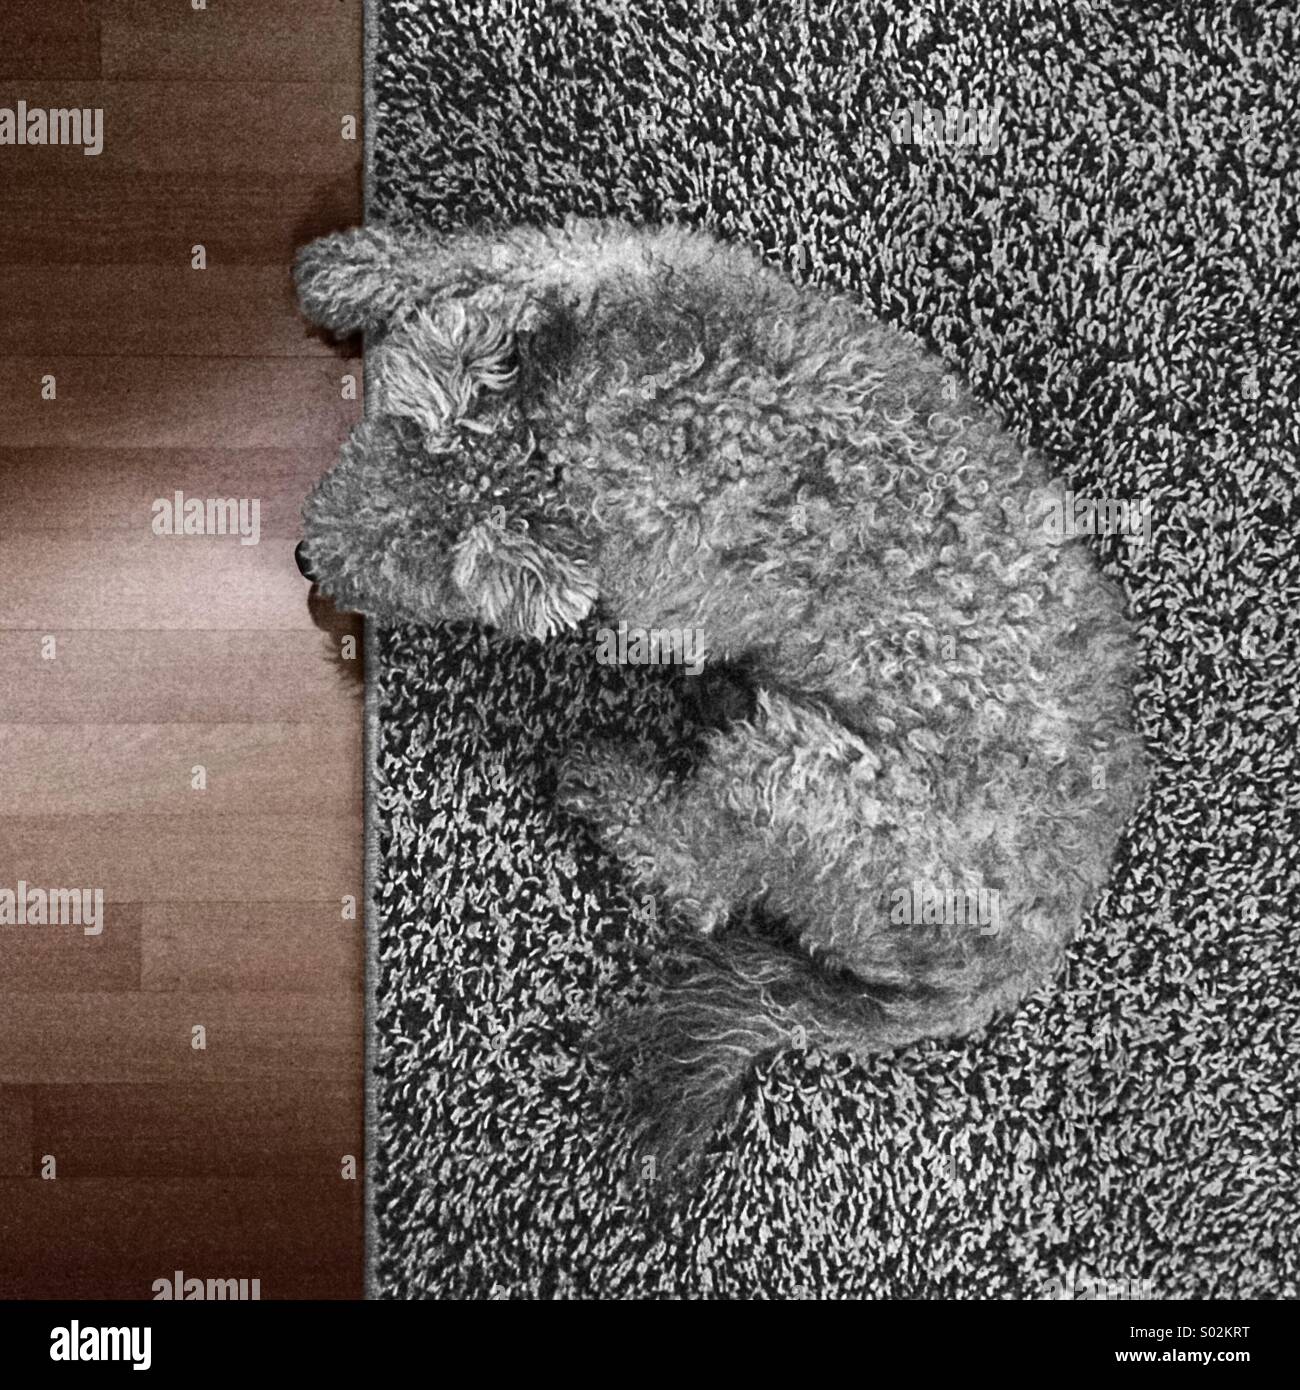 A grey dog on a grey carpet Stock Photo